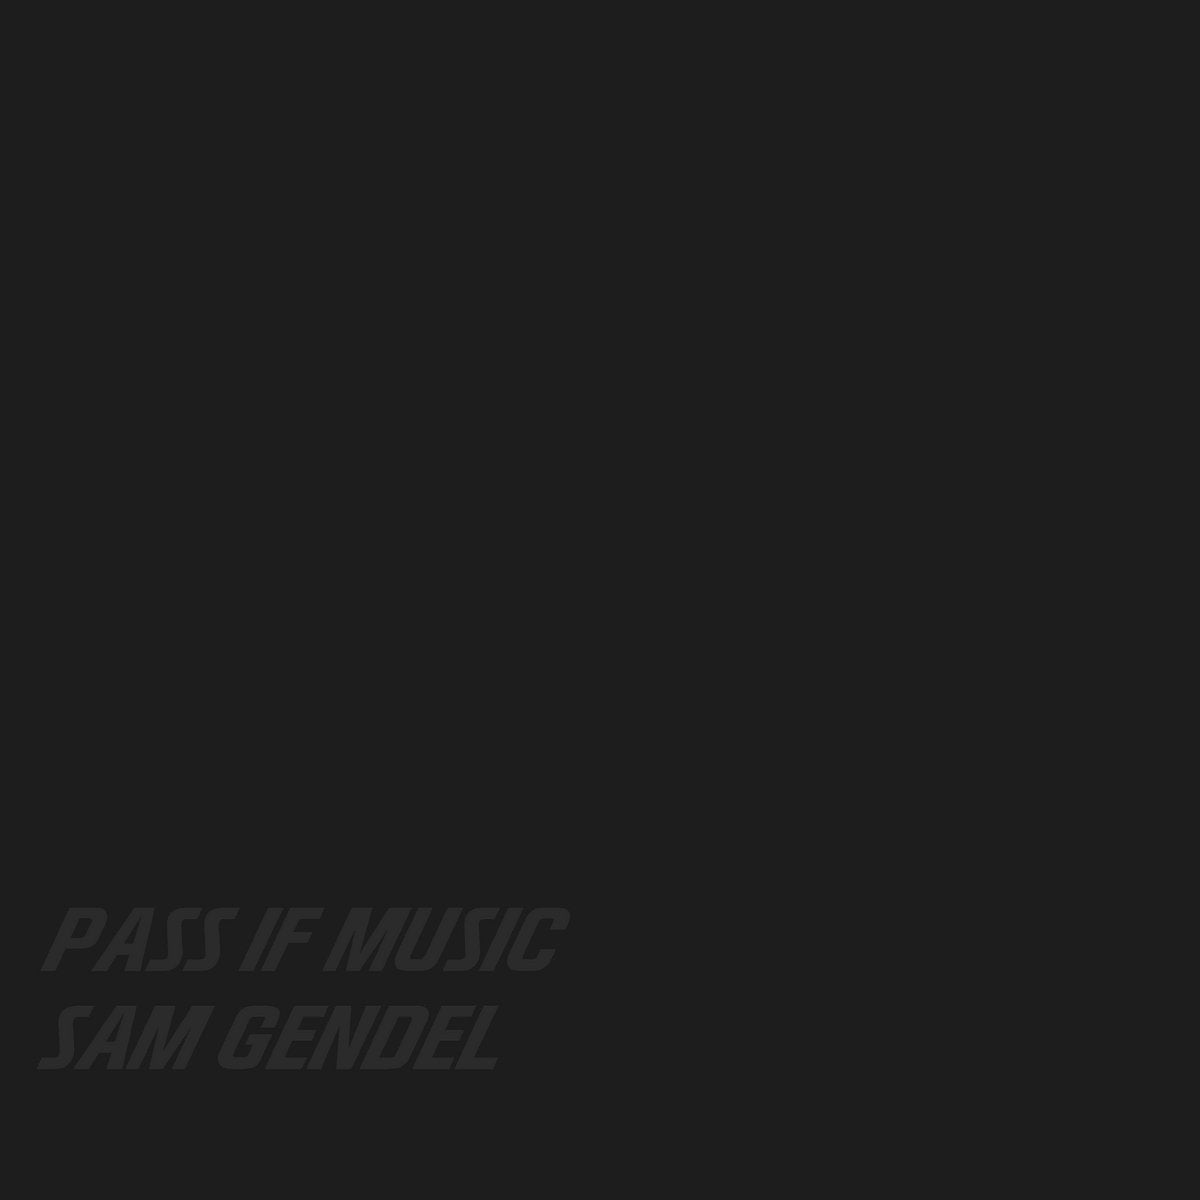 SAM GENDEL - PASS IF MUSIC Vinyl LP